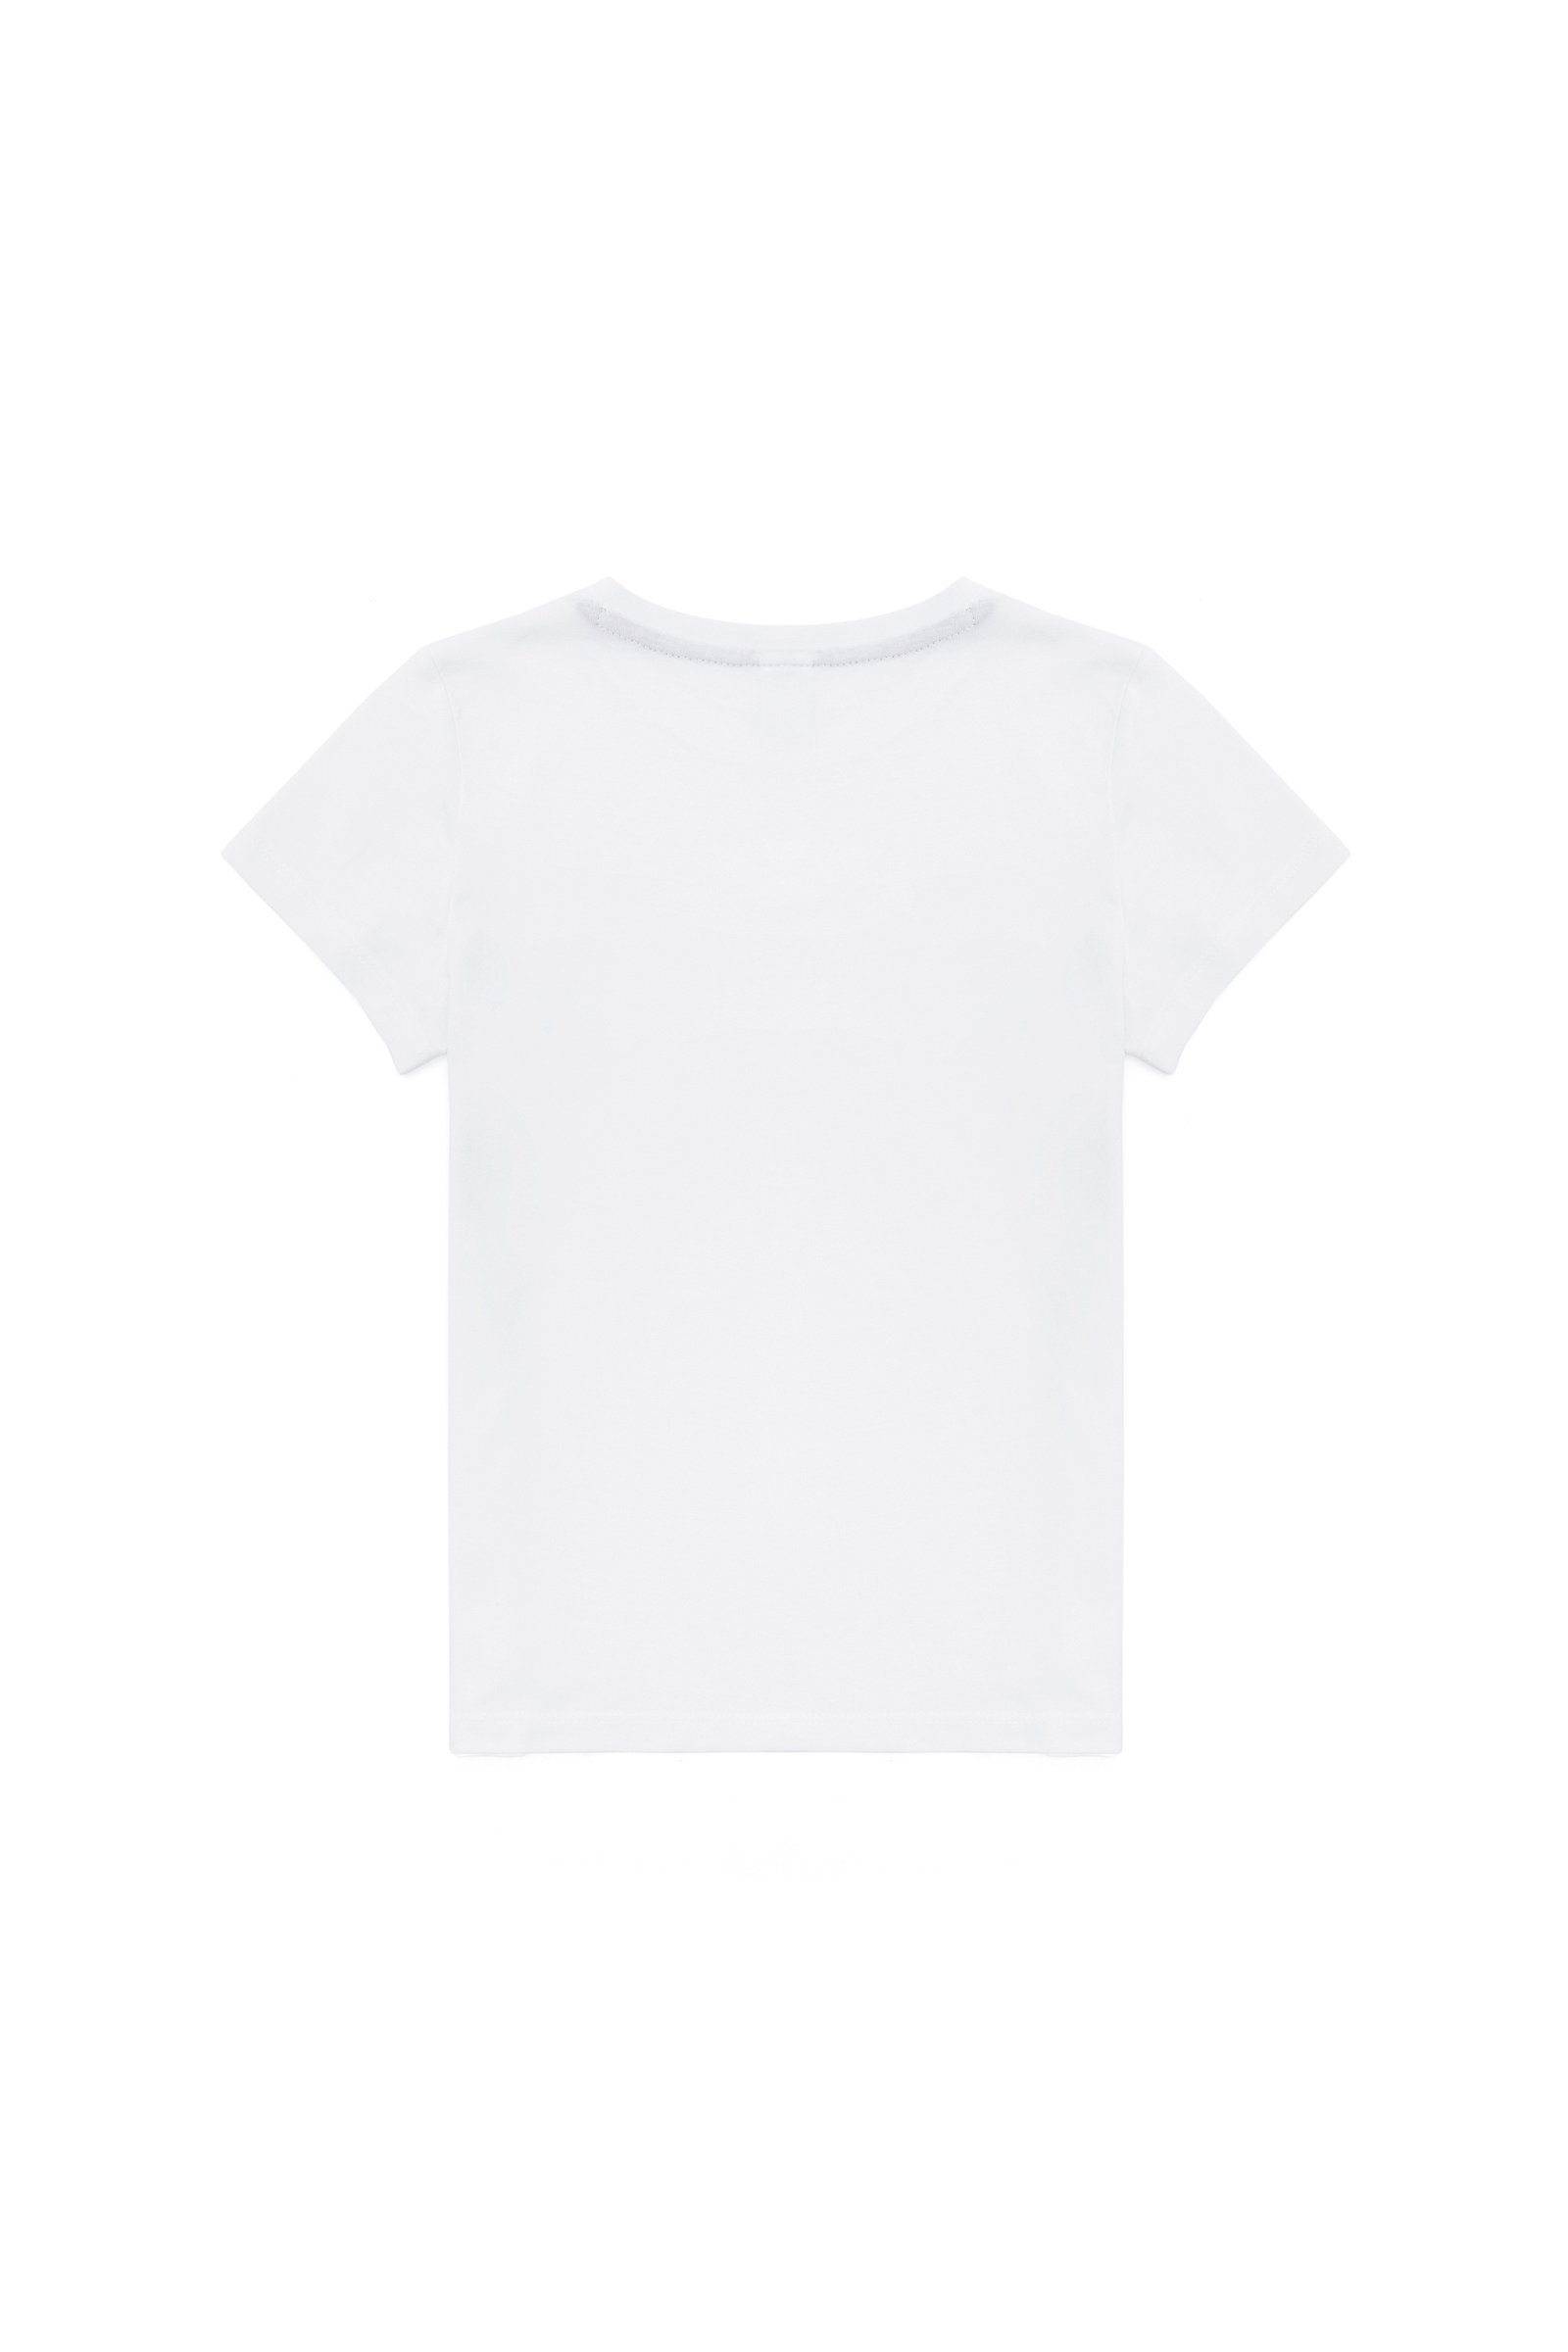 تی شرت  سفید  رگولار  پسرانه یو اس پولو | US POLO ASSN